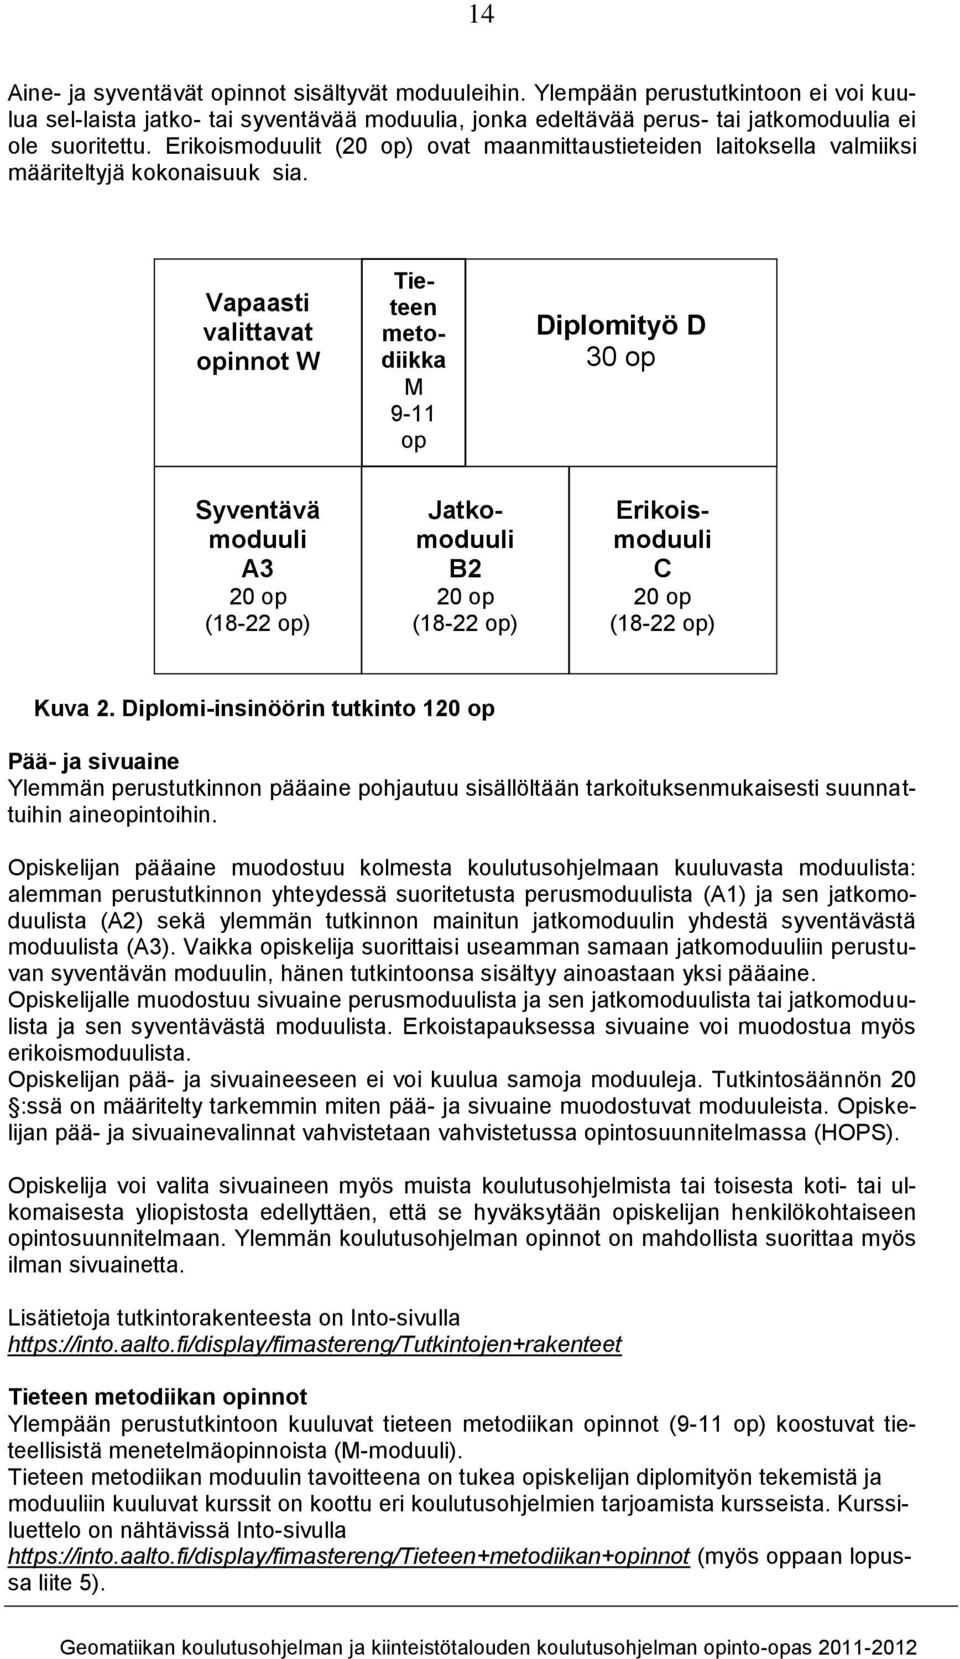 Vapaasti valittavat opinnot W Tieteen metodiikka M 9-11 op Diplomityö D 30 op Syventävä moduuli A3 20 op (18-22 op) Jatkomoduuli B2 20 op (18-22 op) Erikoismoduuli C 20 op (18-22 op) Kuva 2.